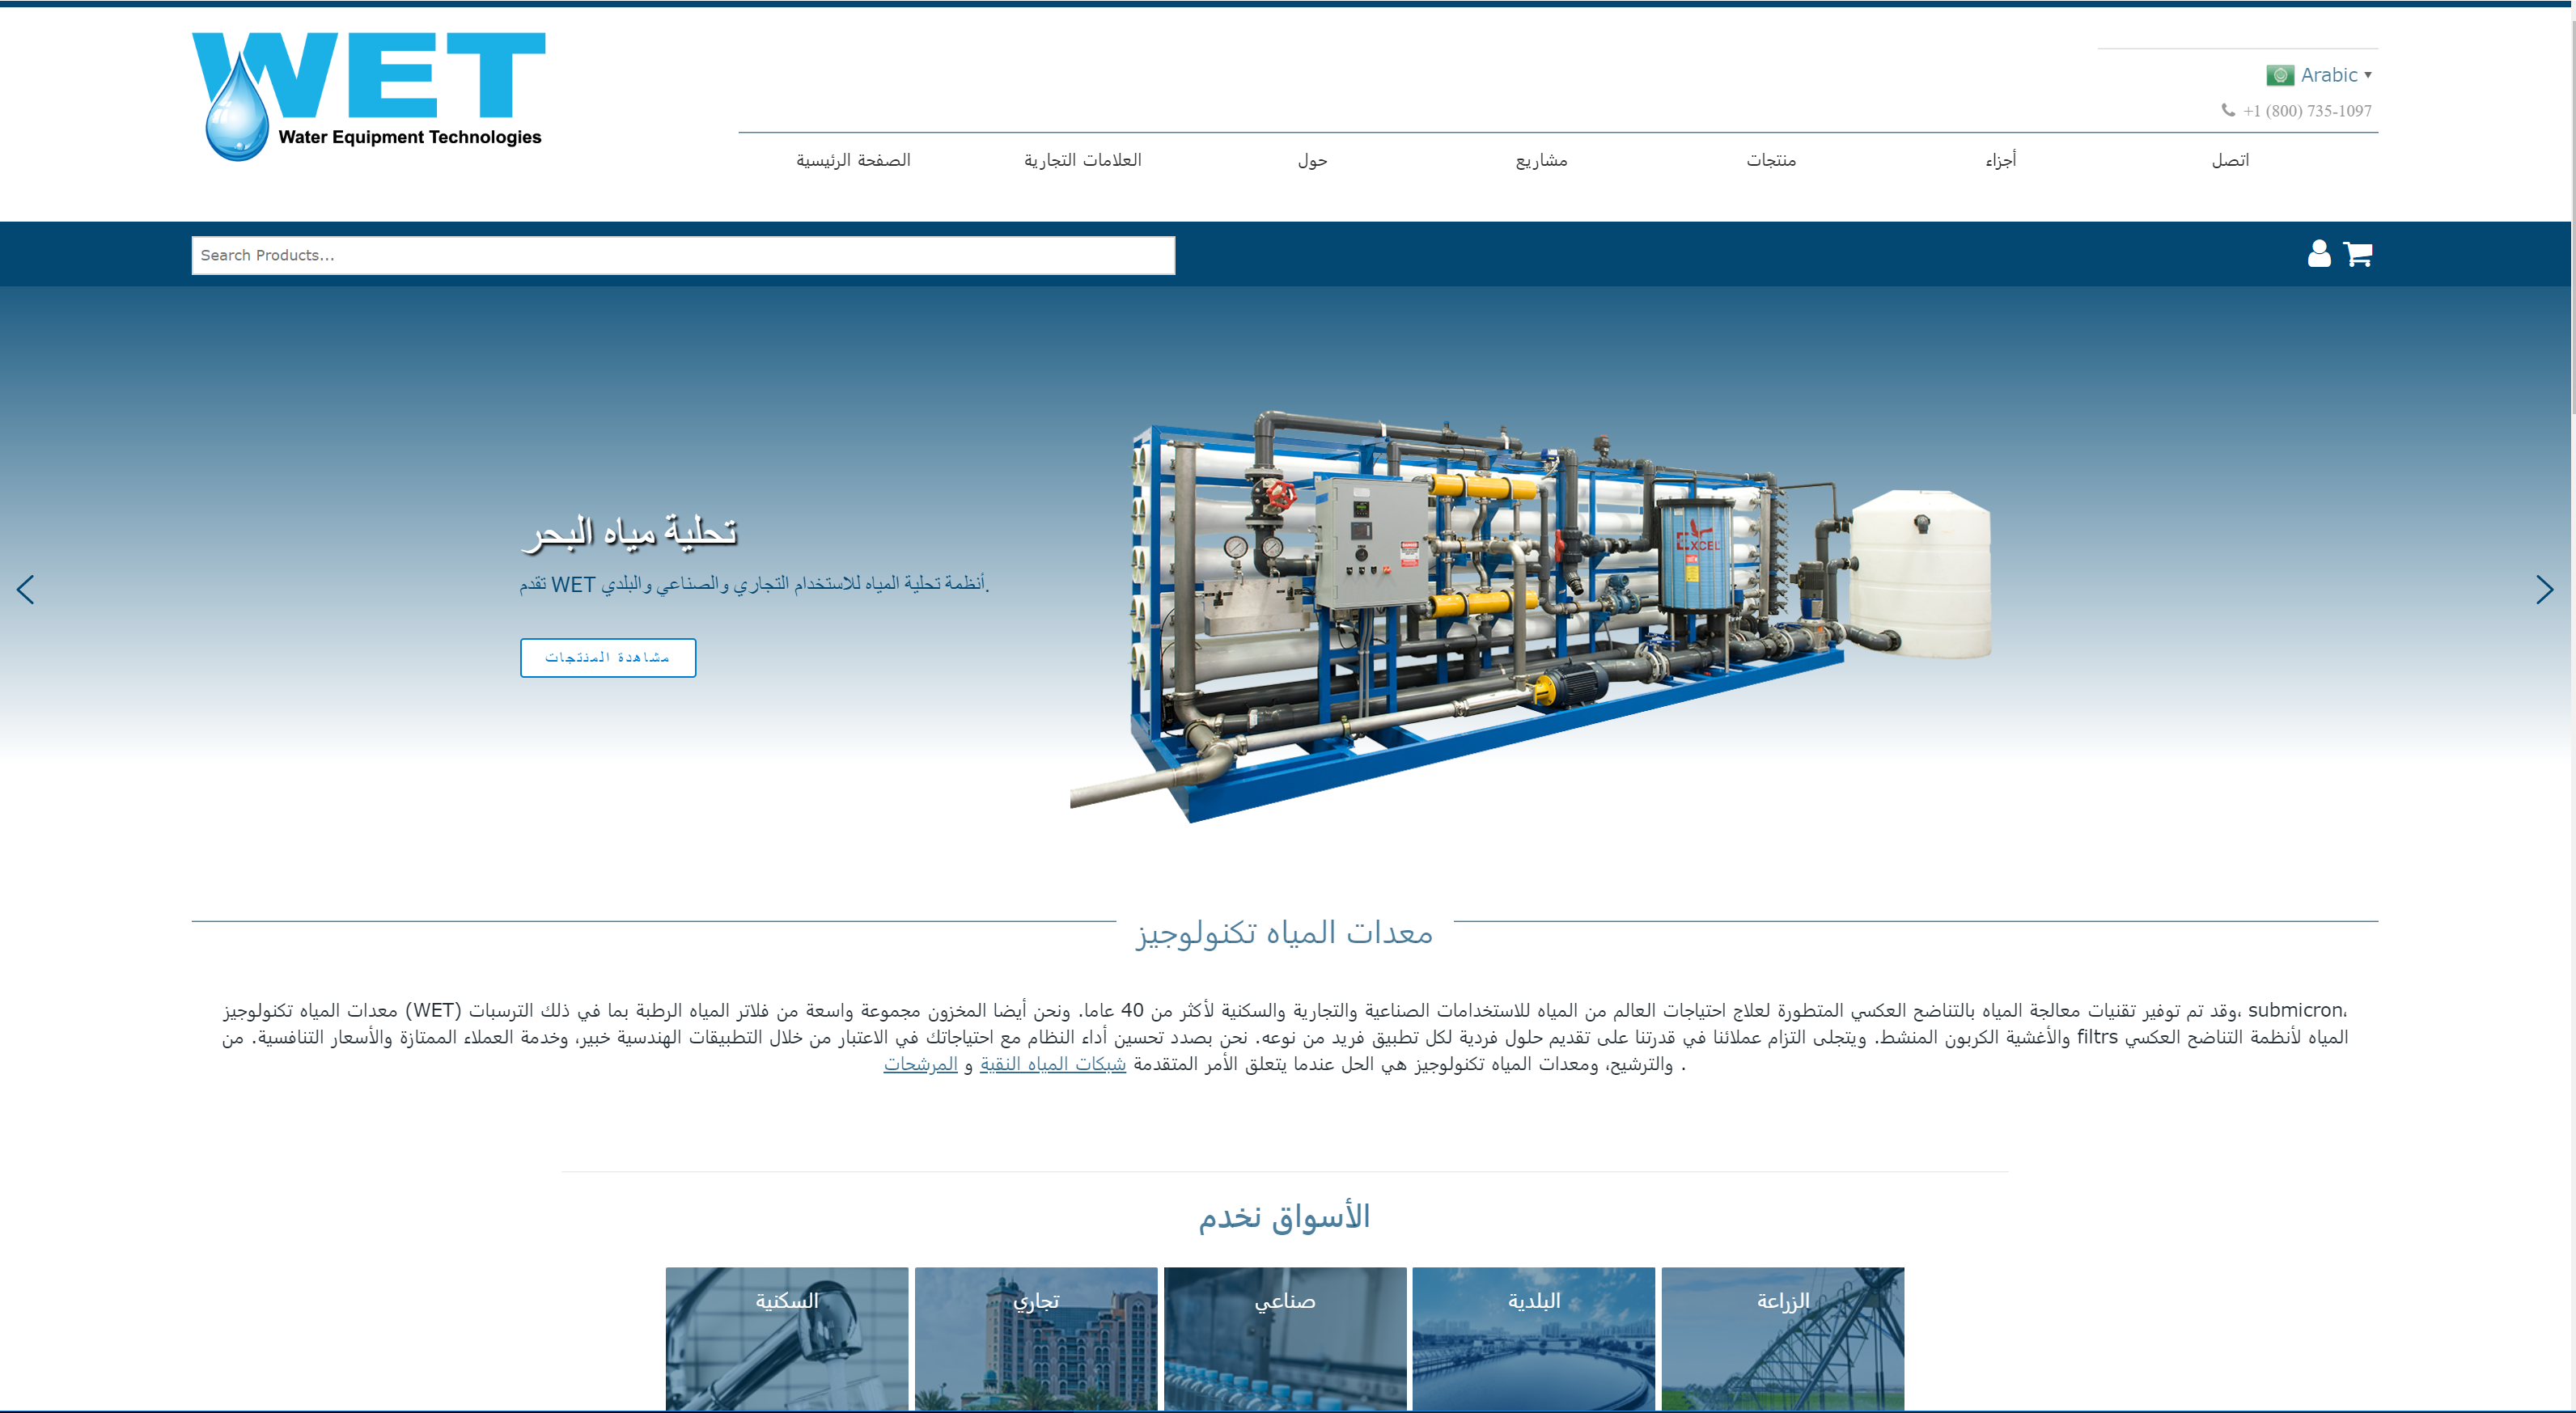 Water Equipment Technologies Arabic.